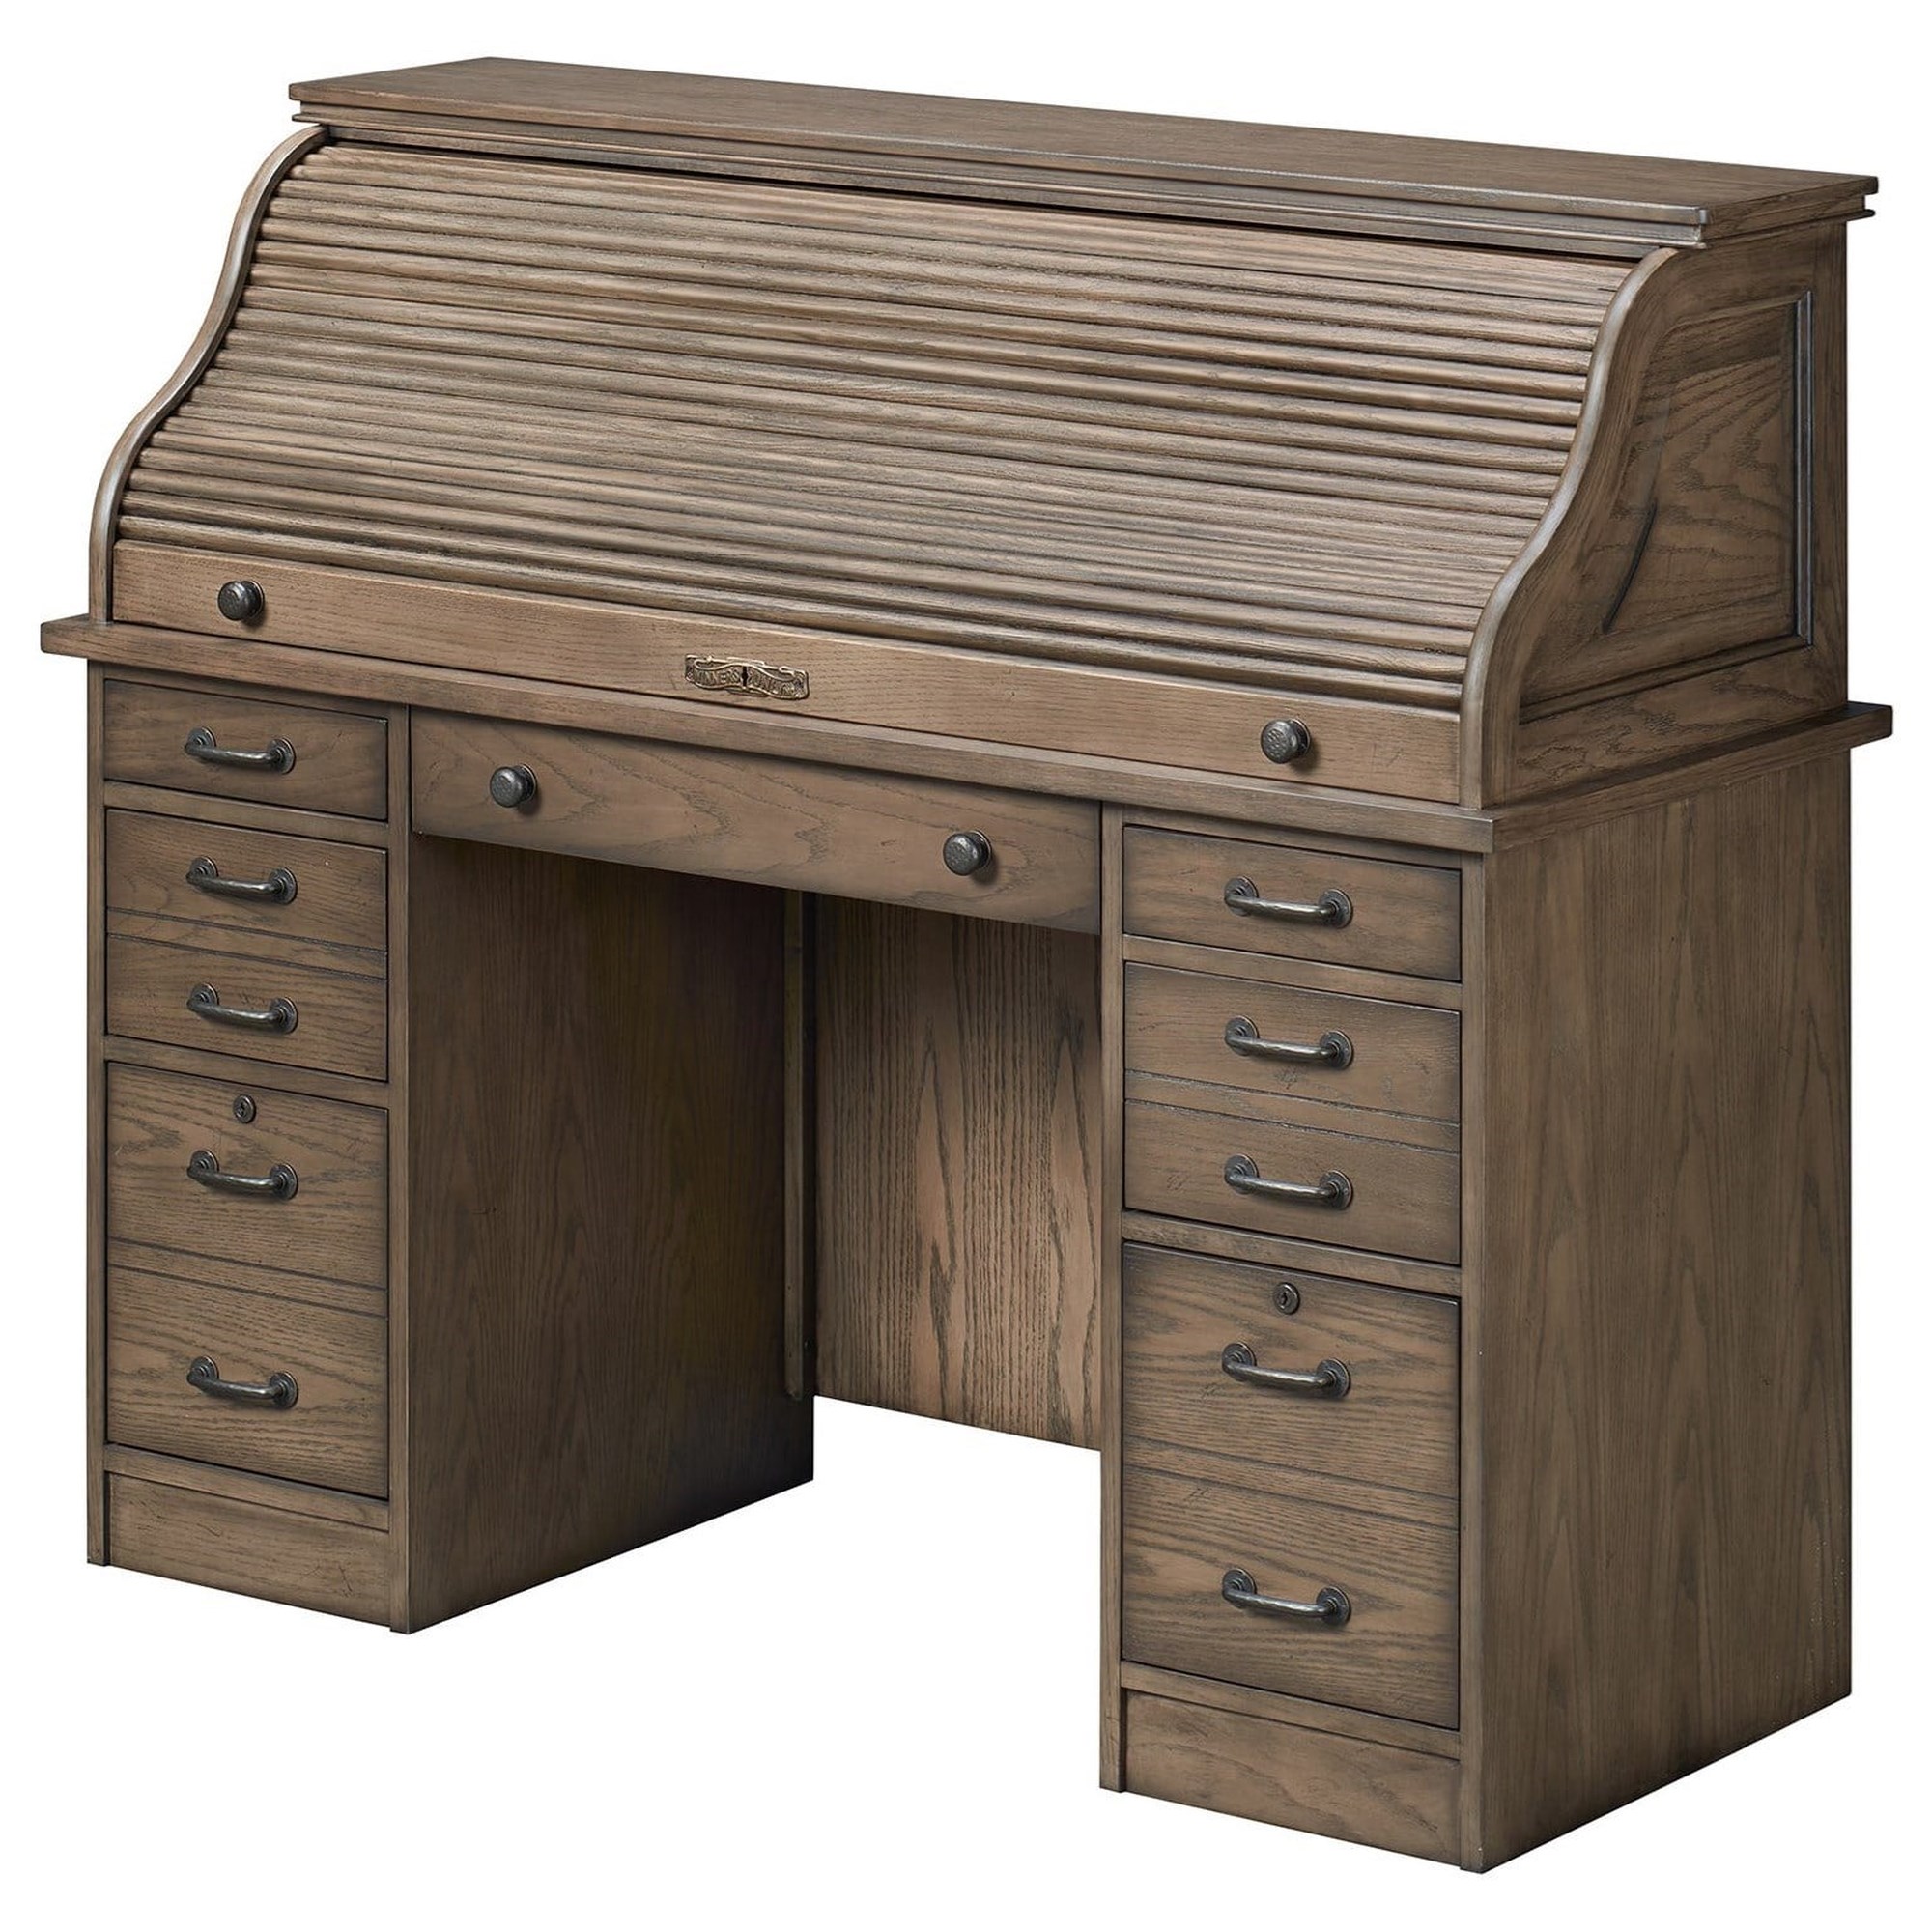 DOITOOL 3pcs Furniture Drawer Locks Rolltop Desk Lock Heavy Duty